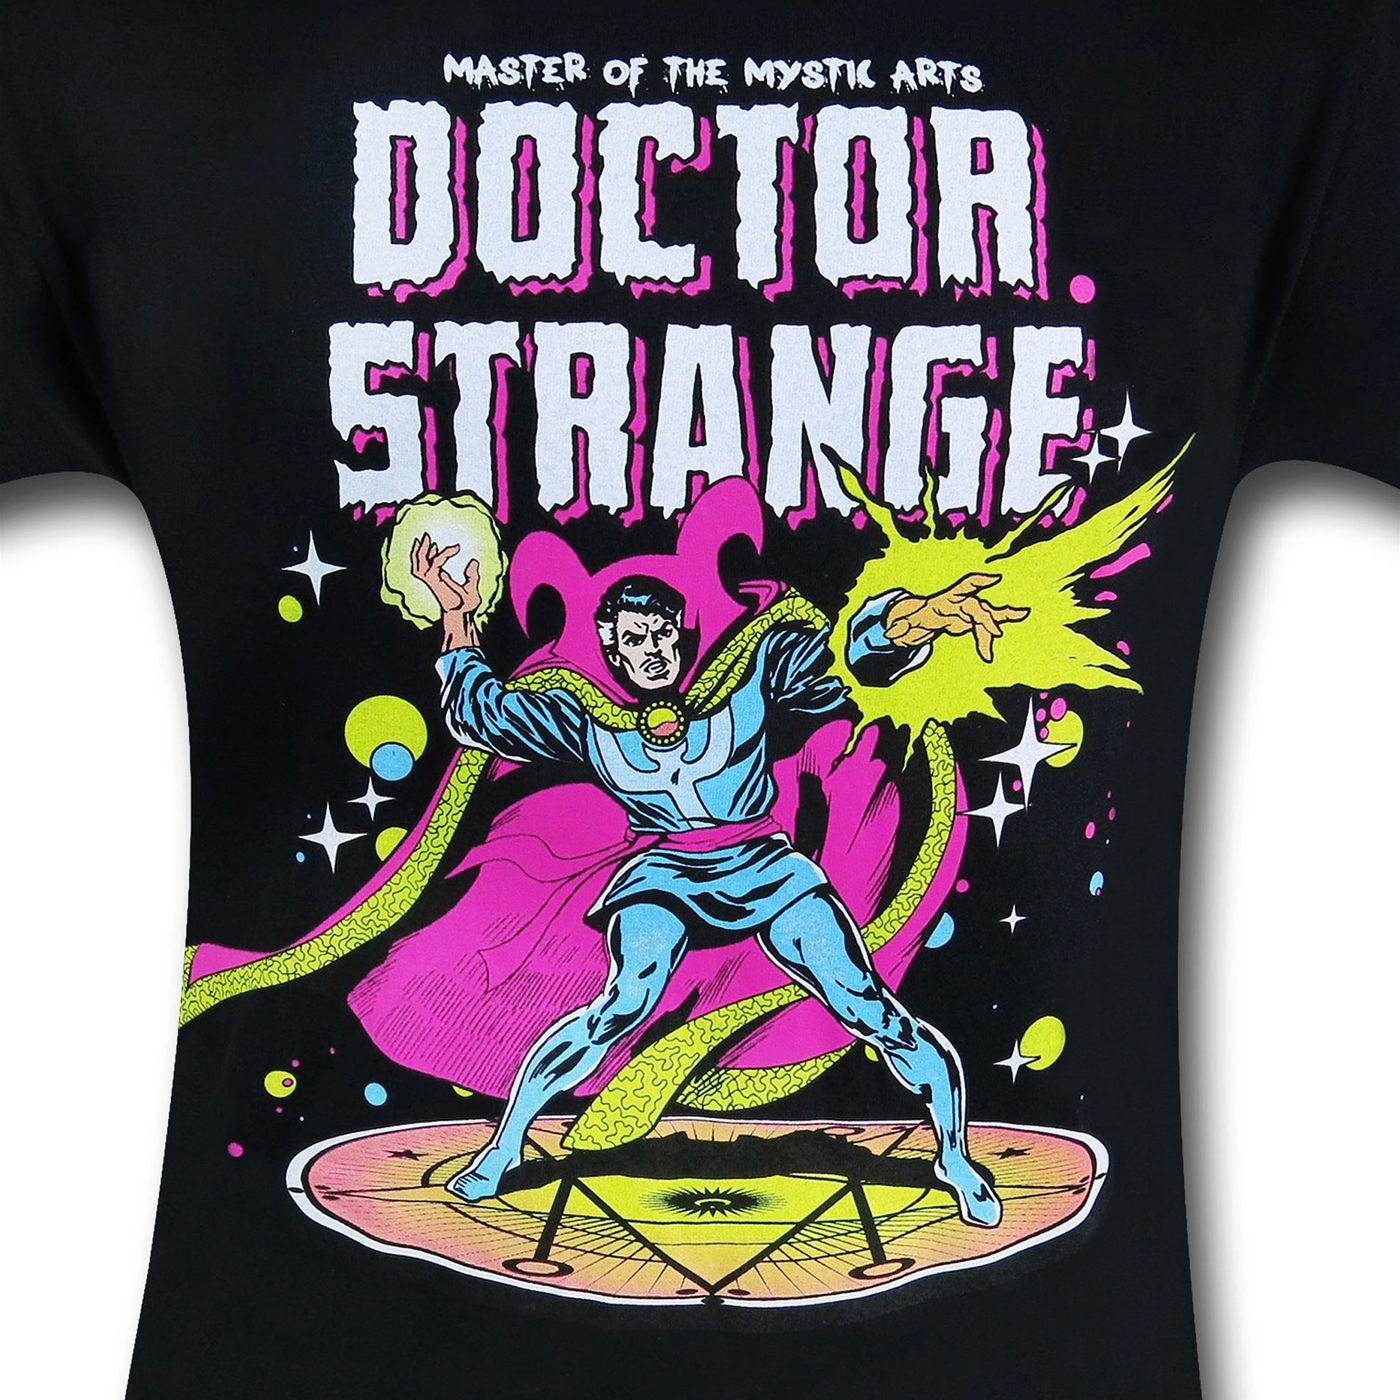 Dr. Strange Mystic Arts T-Shirt